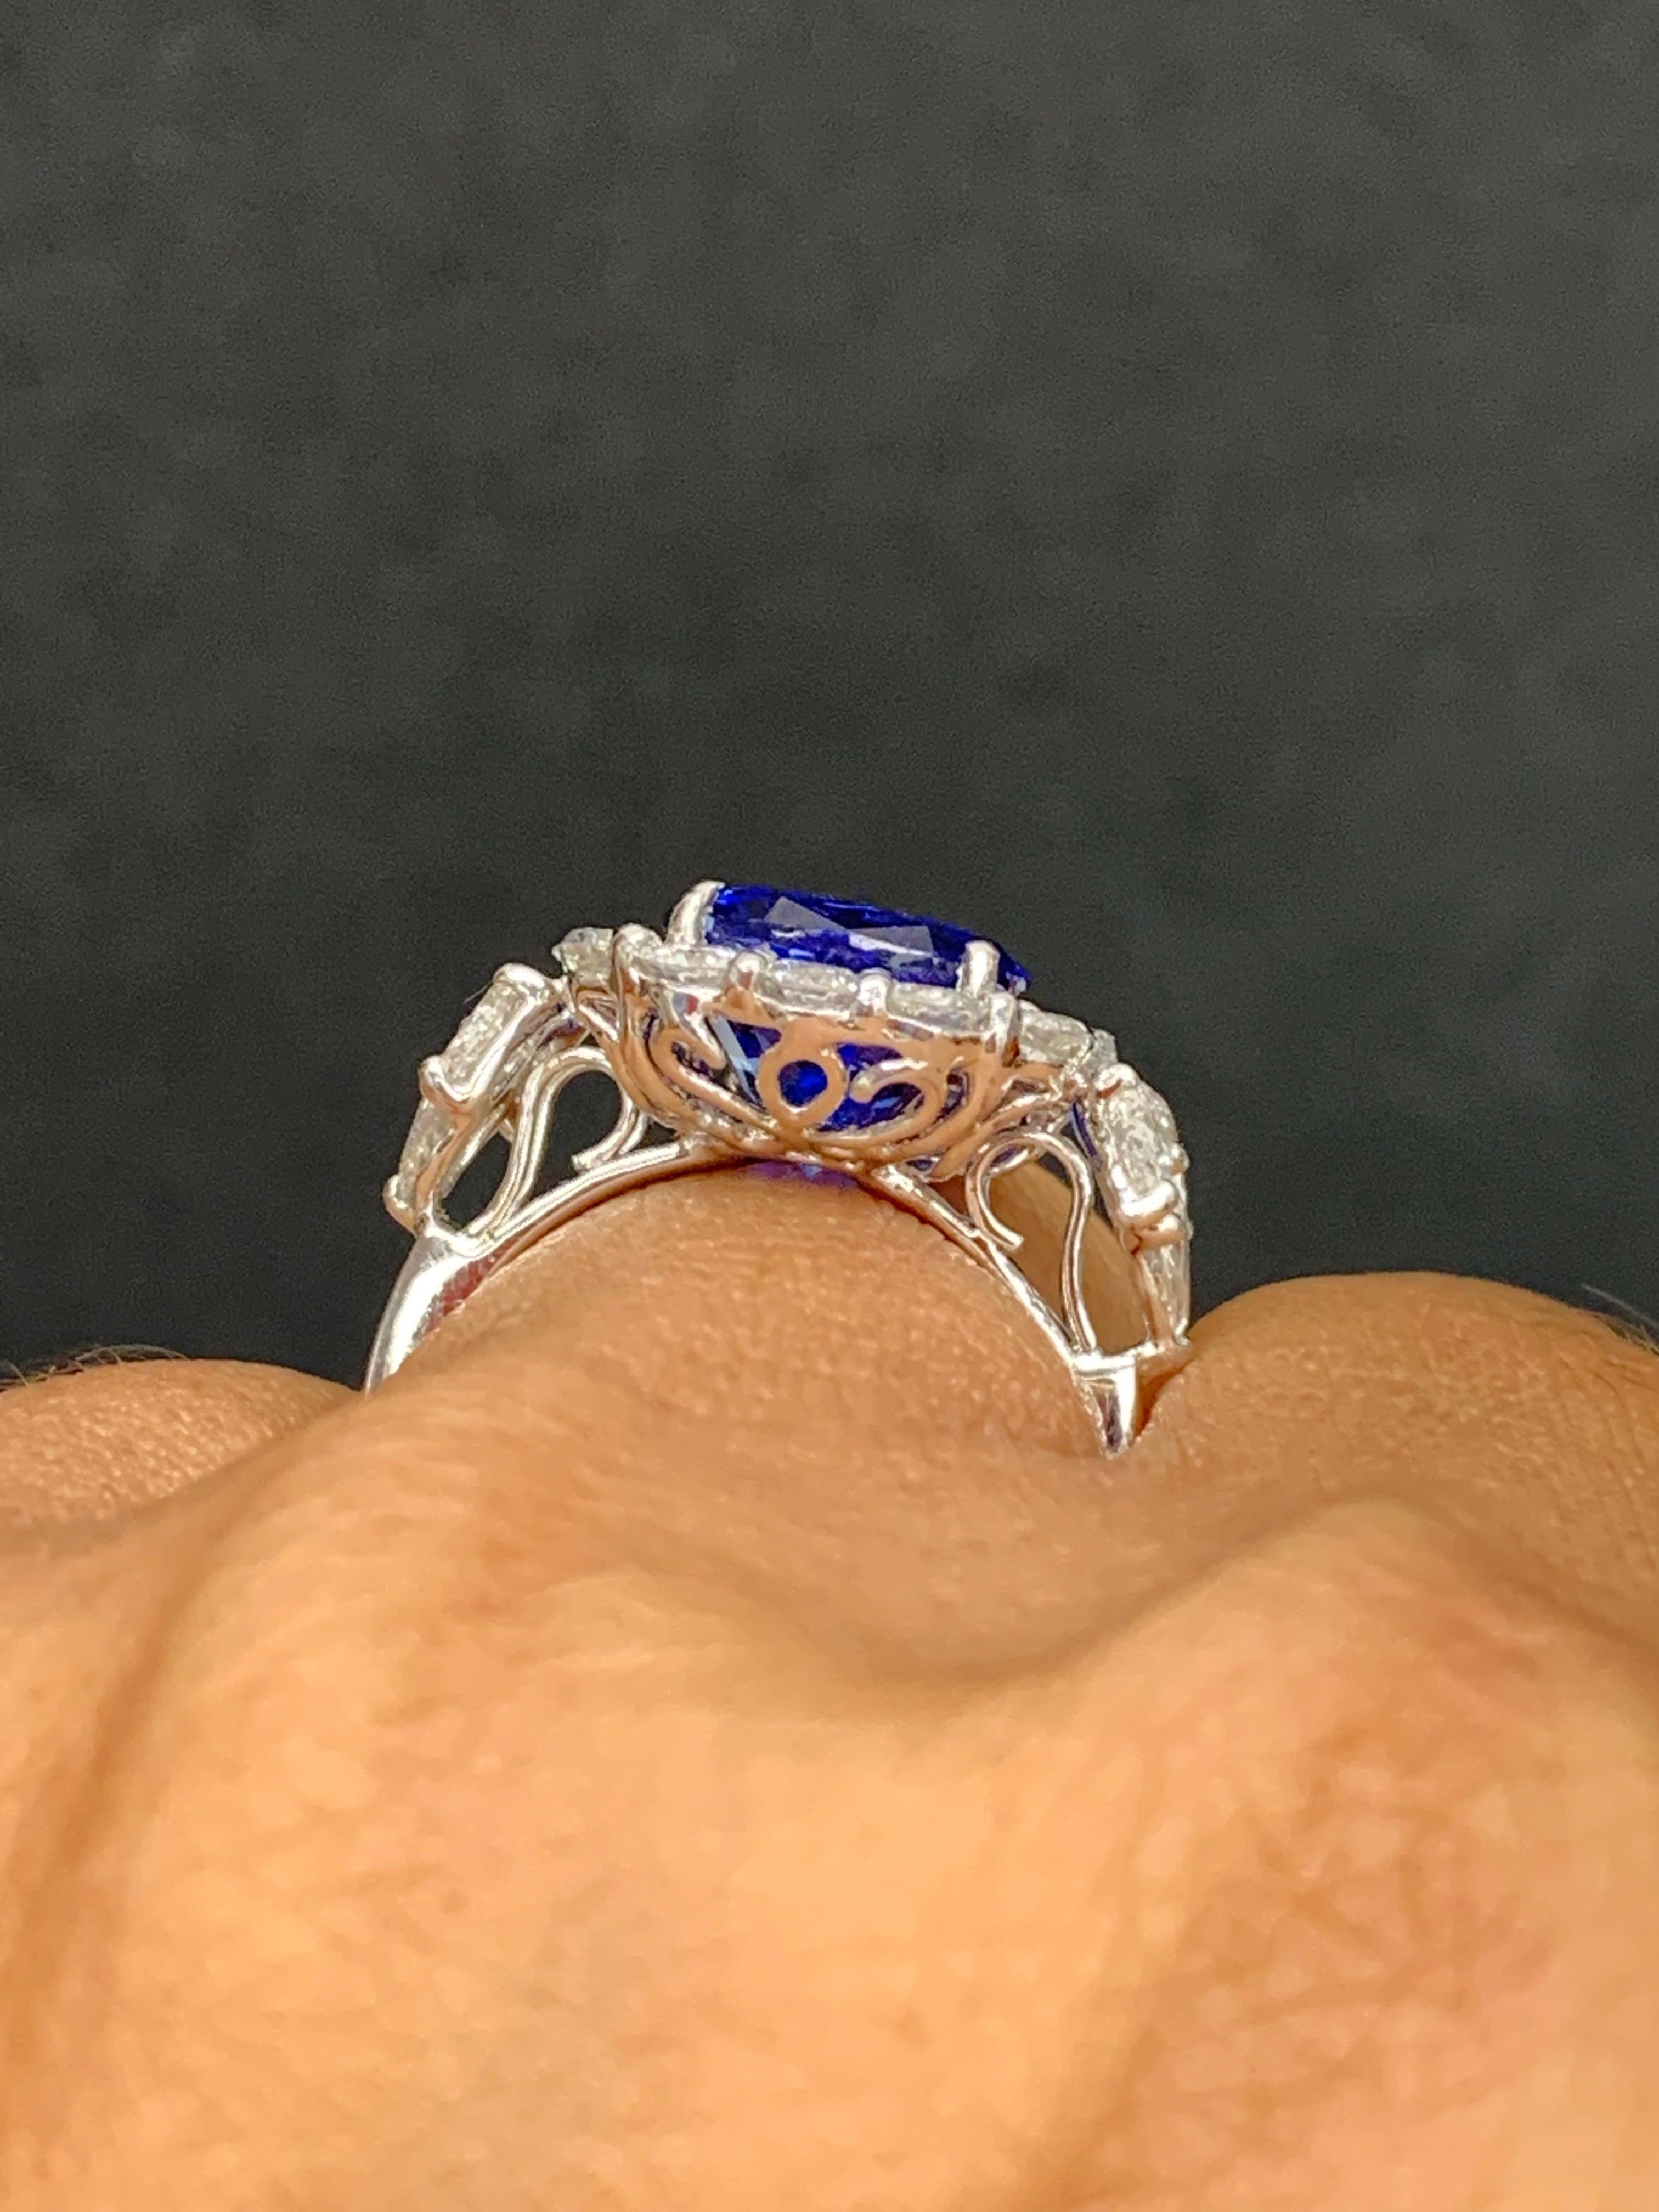 6.61 Carat Cushion Cut Blue Sapphire Diamond Engagement Ring in Platinum For Sale 5